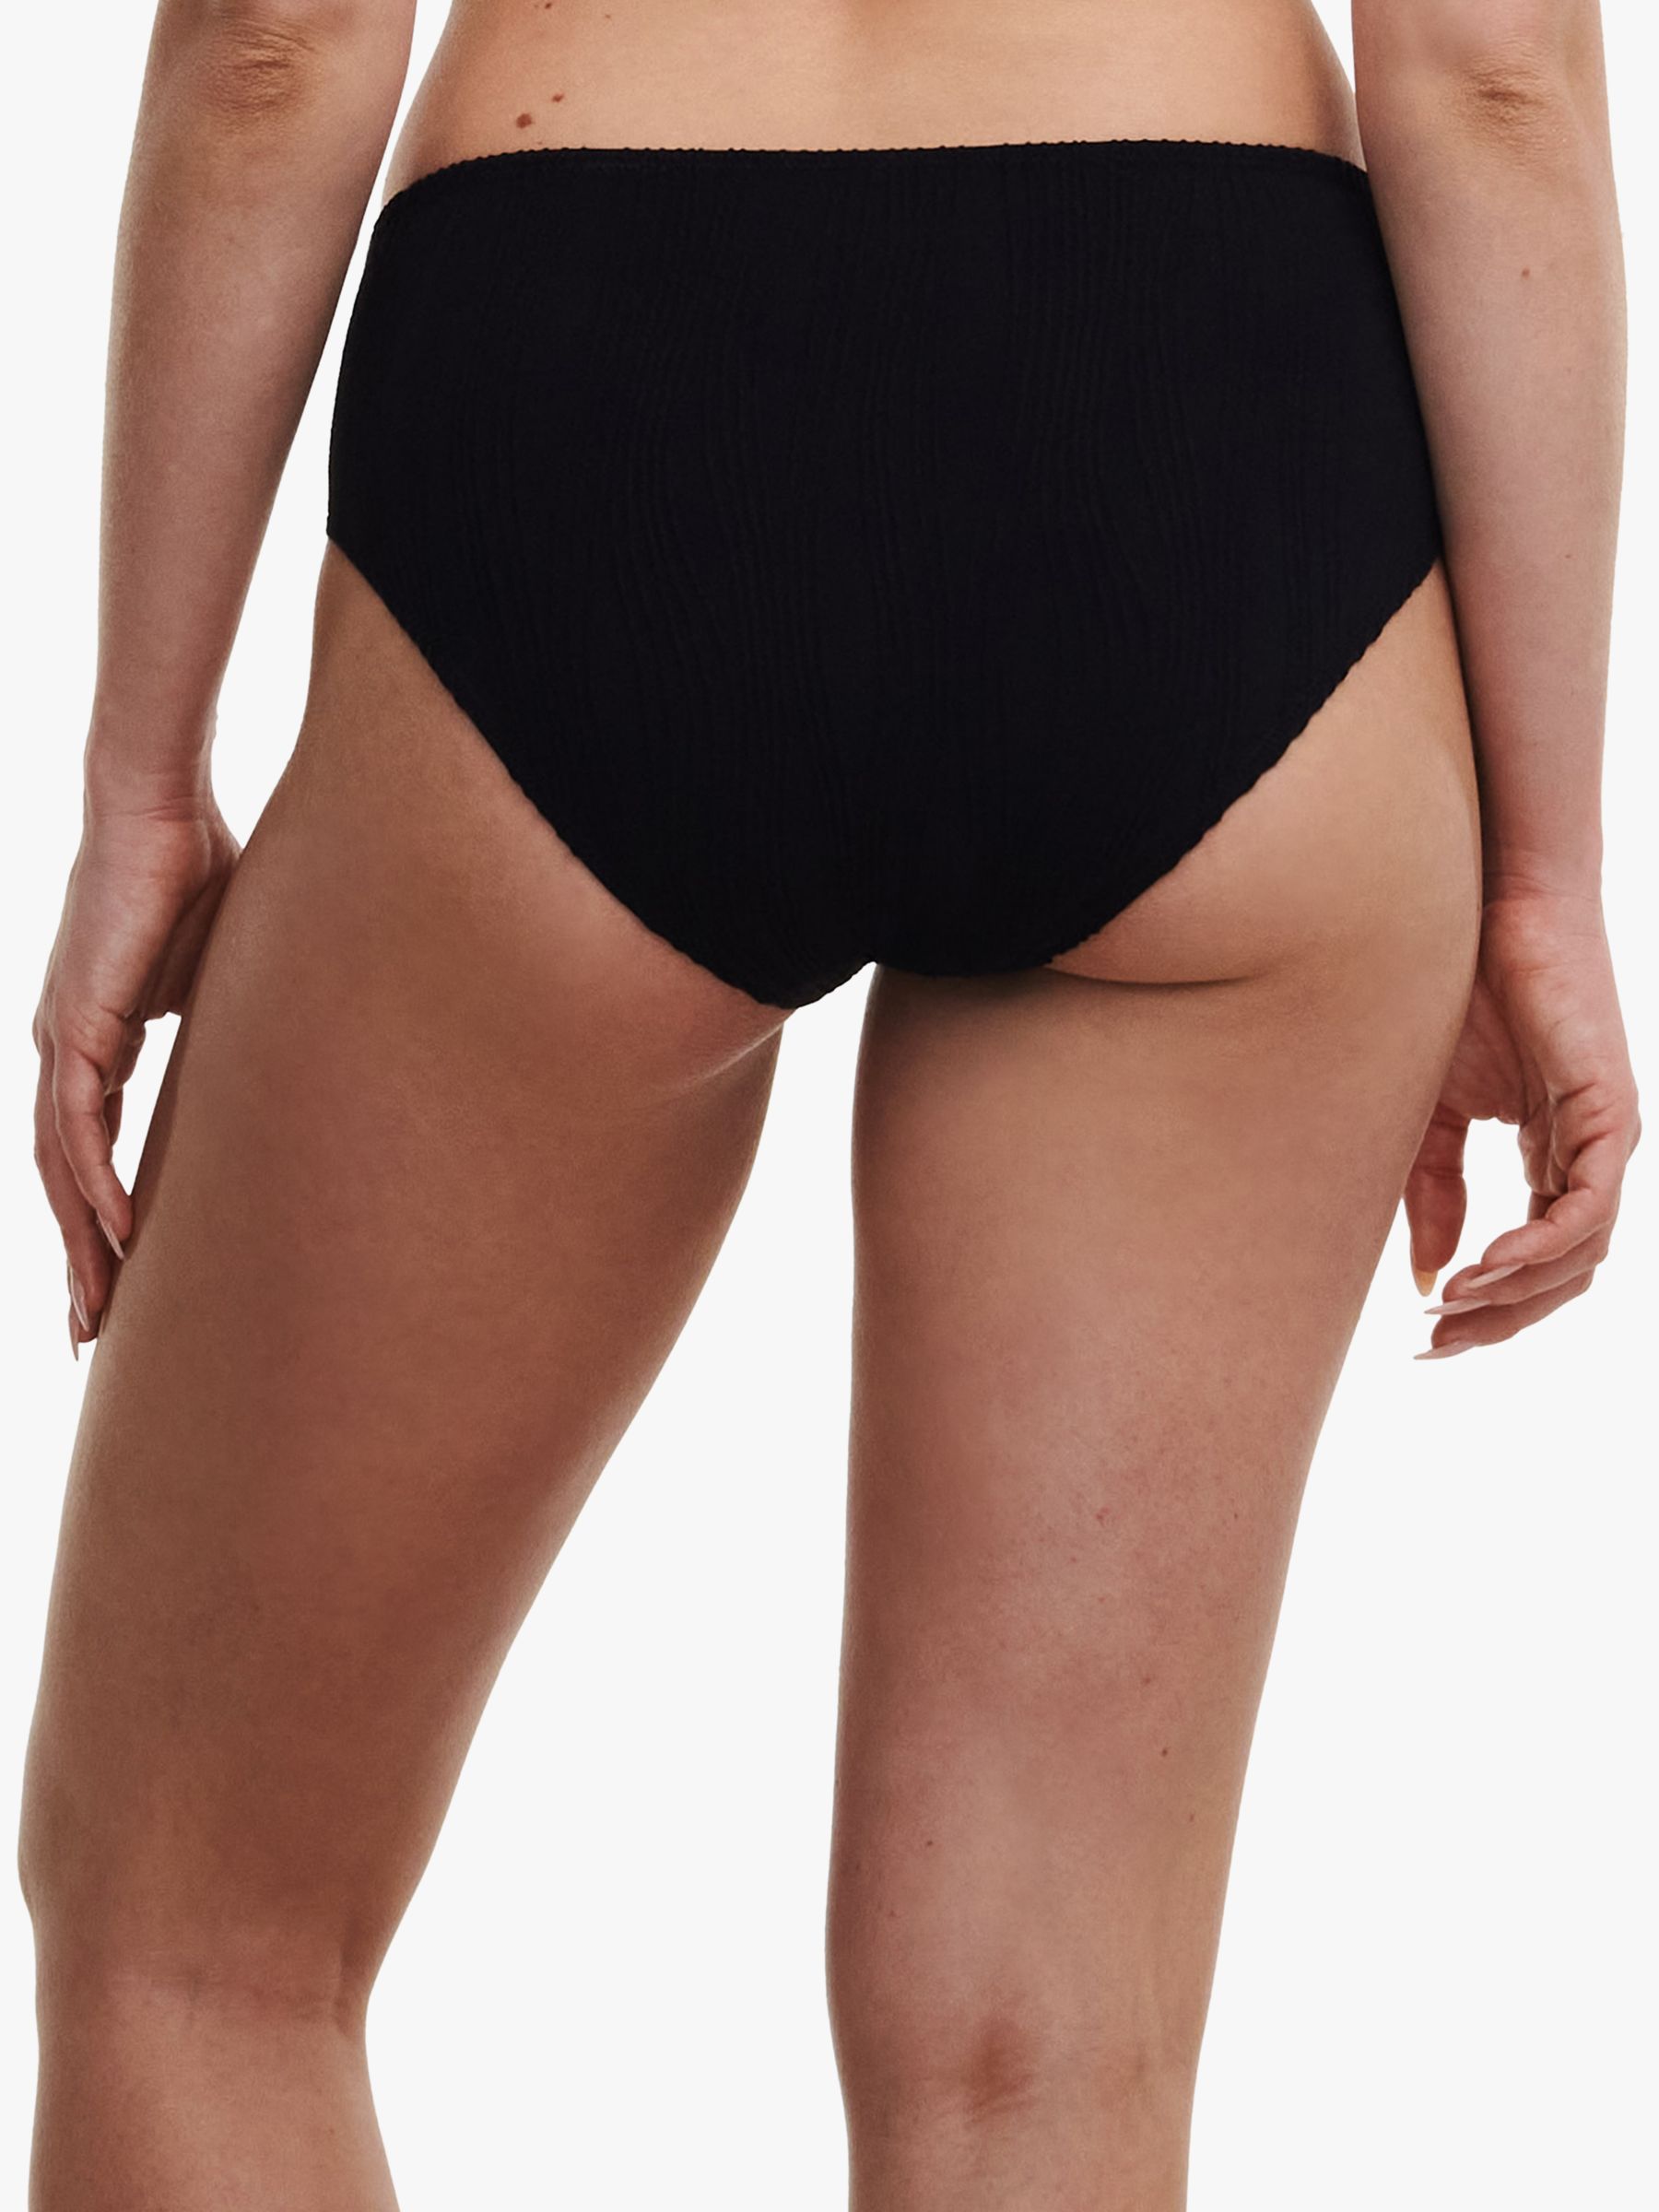 Chantelle Pulp Swimwear Textured Full Brief Bikini Bottoms, Black, One Size